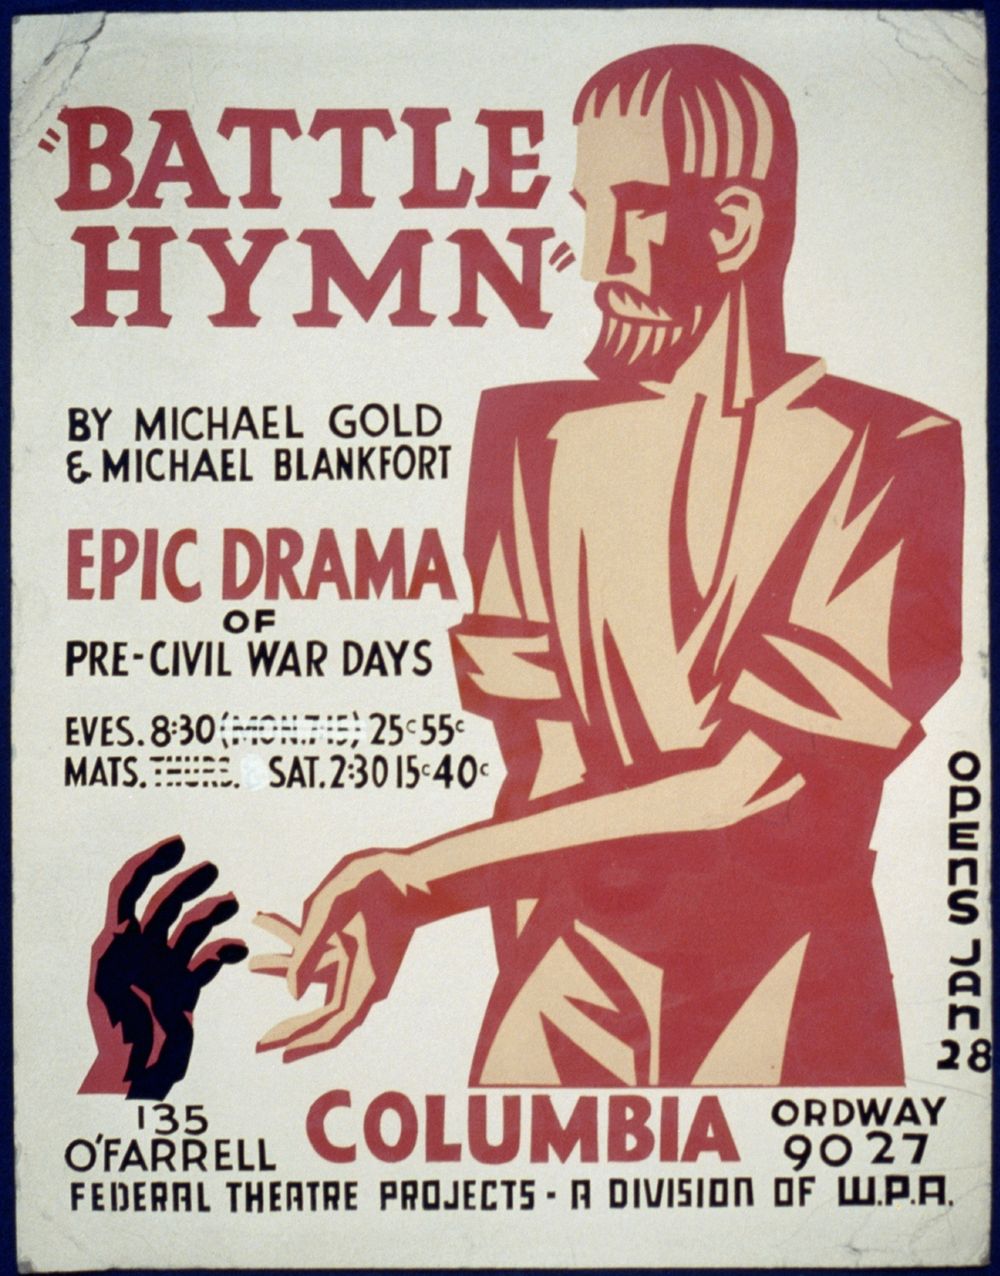 "Battle hymn" by Michael Gold & Michael Blankfort epic drama of pre-civil war days.